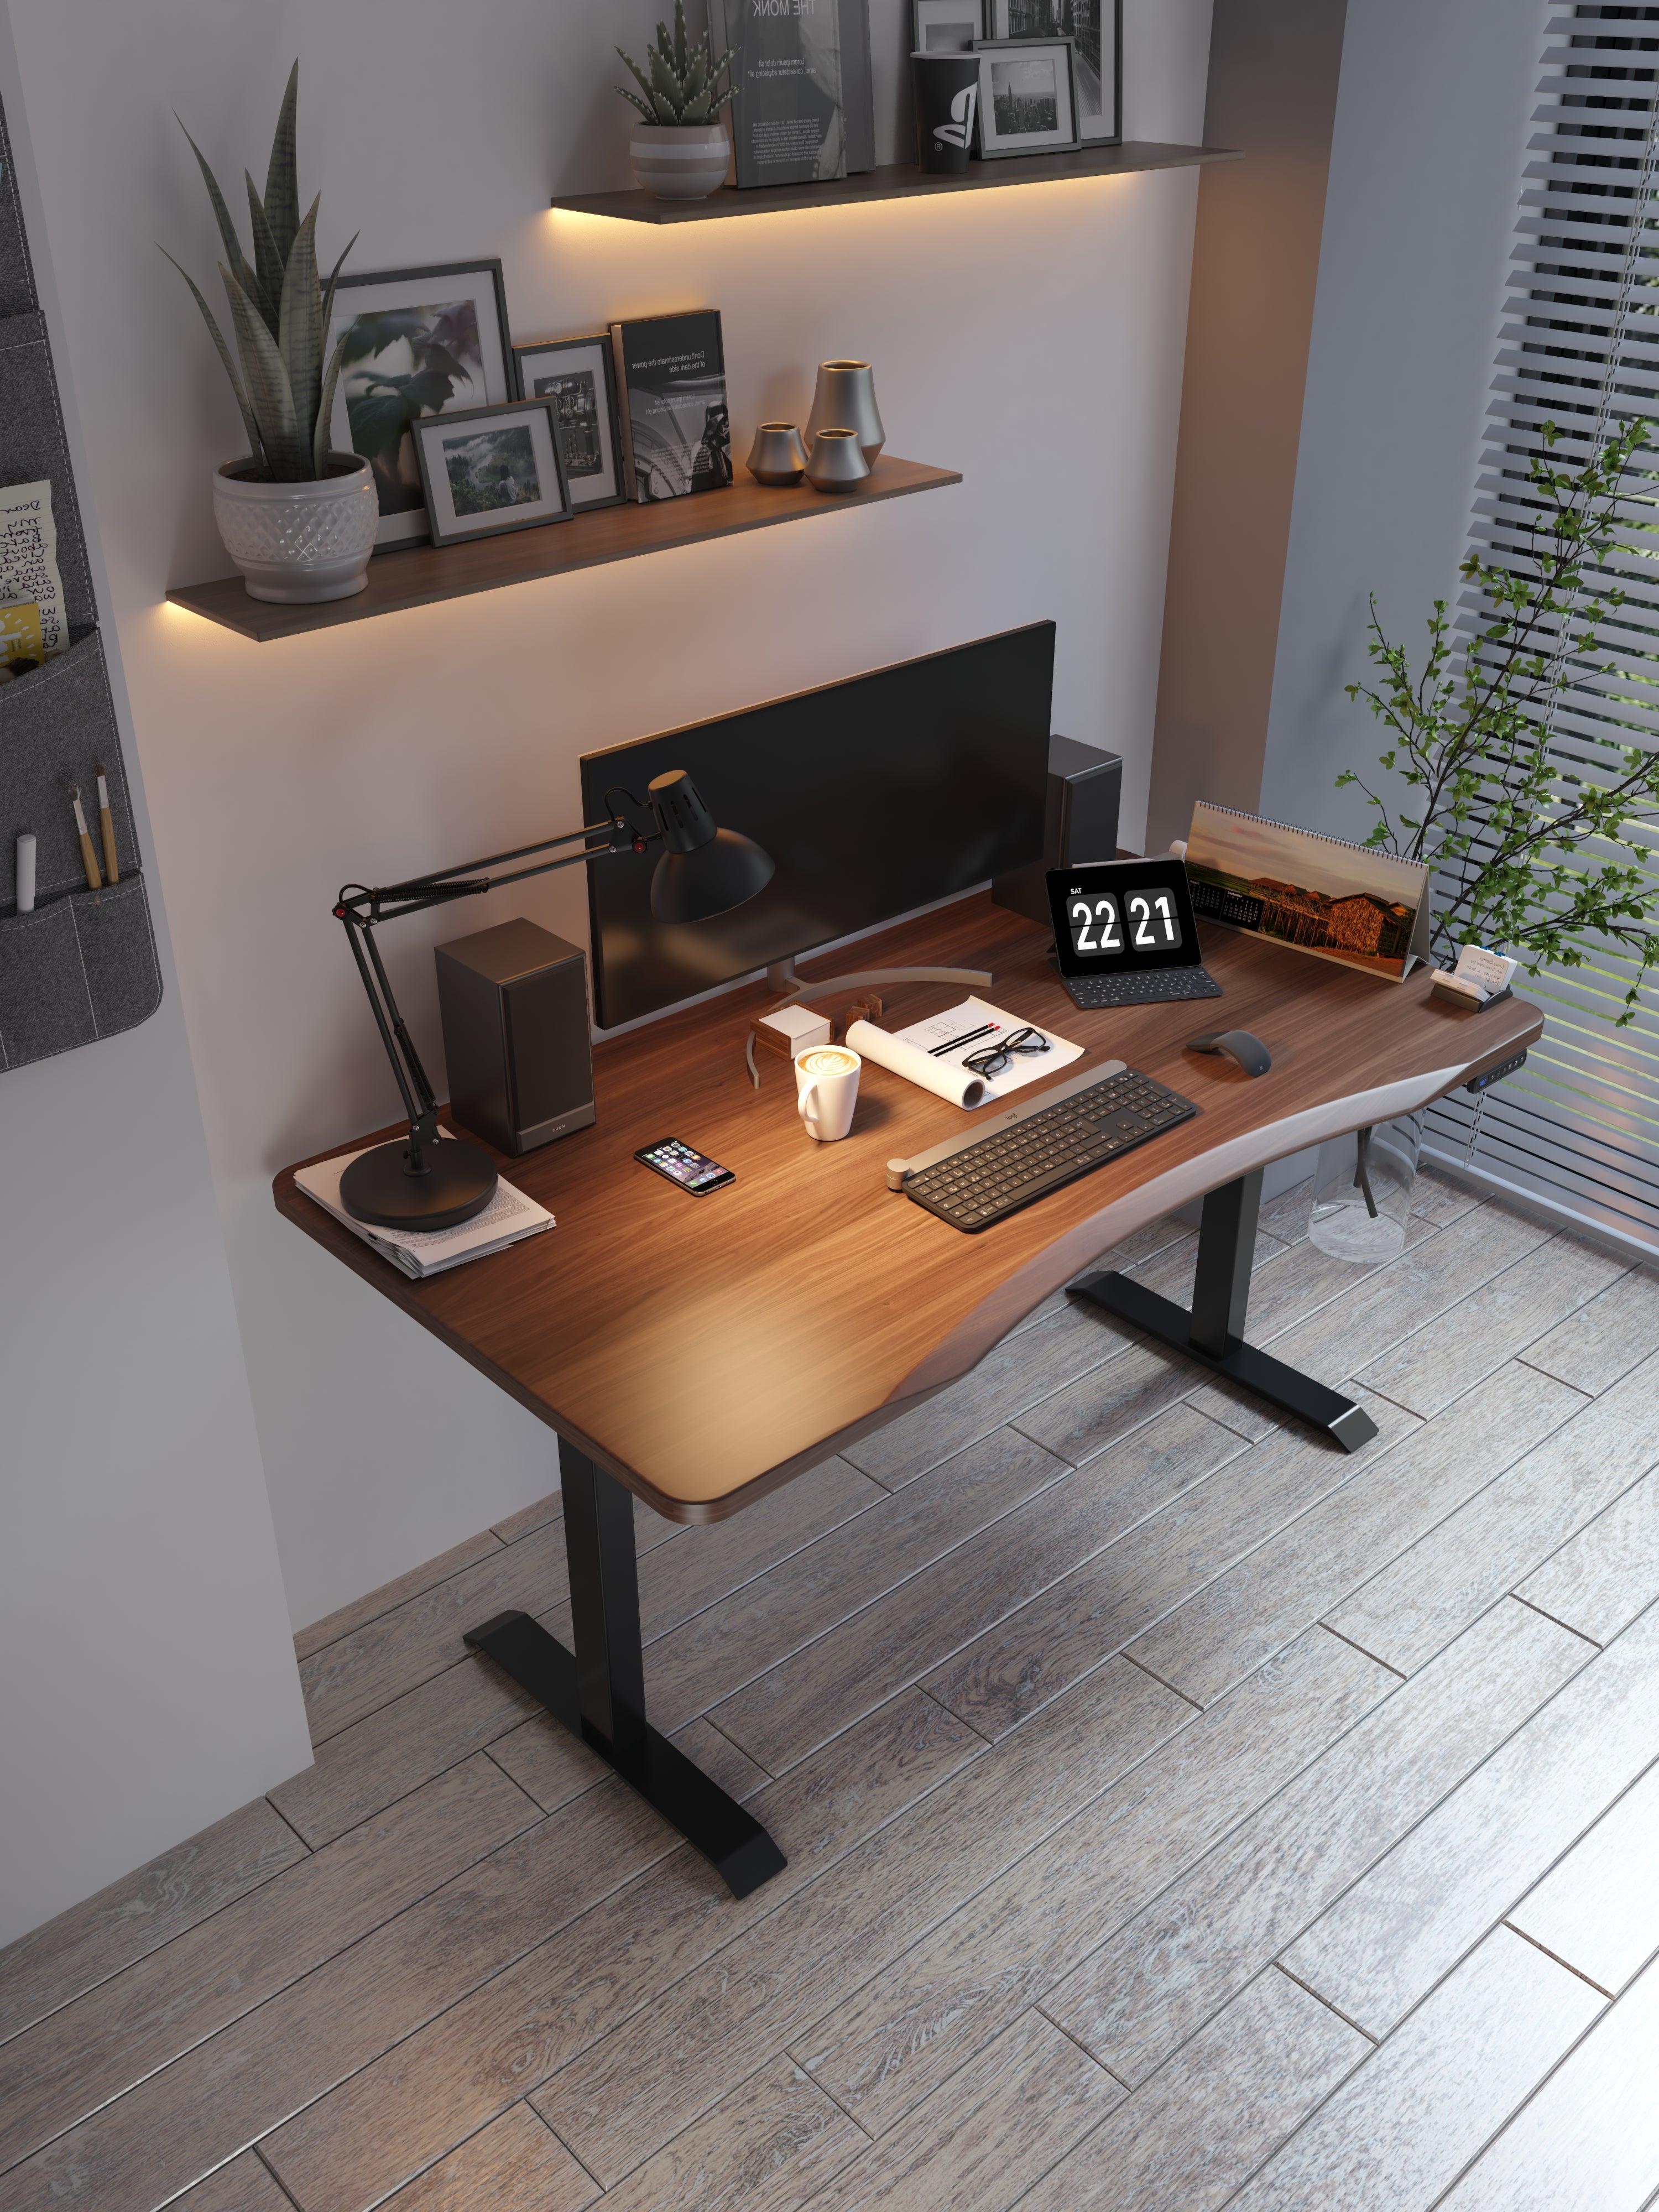 Updesk ERGO PRO: Ergonomic Height Adjustable Home Office Standing Desk